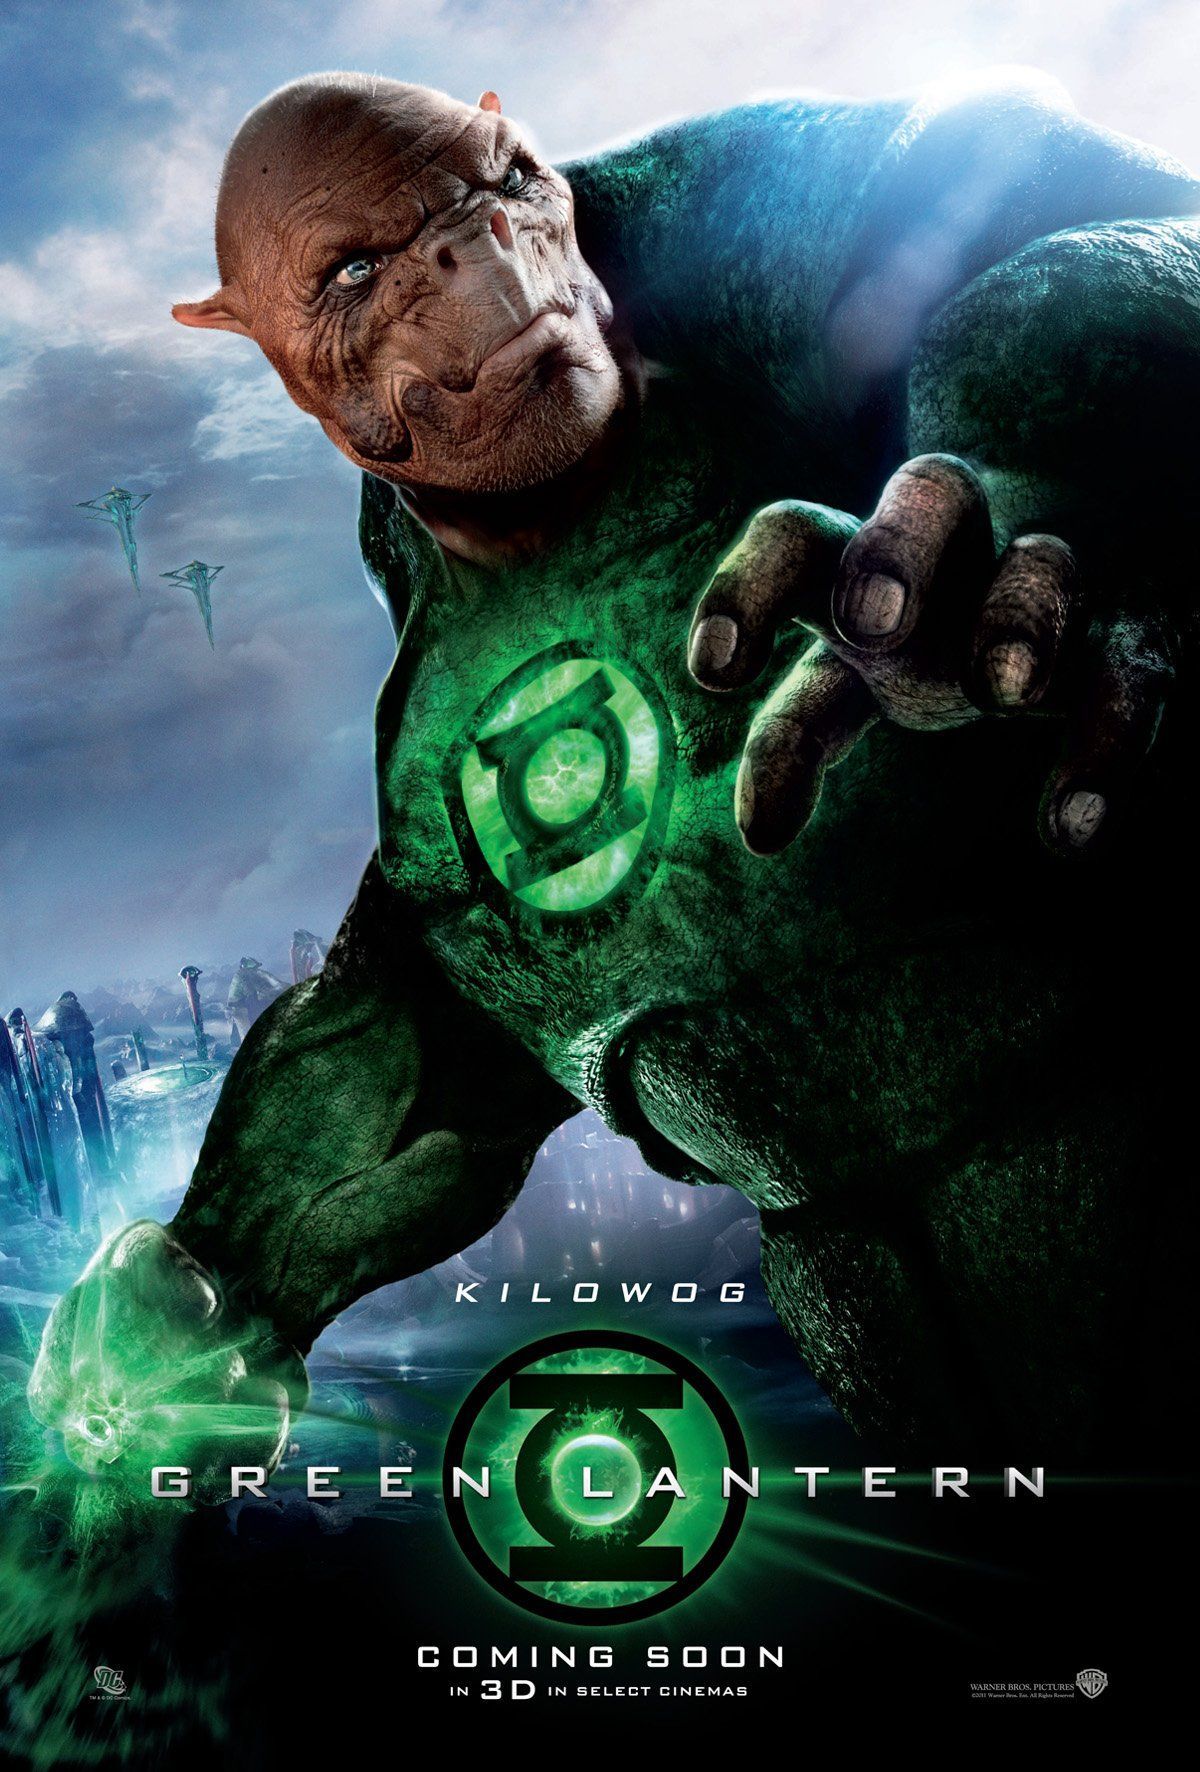 Green Lantern (2011) poster.net. Green lantern movie, Green lantern, Green lantern 2011